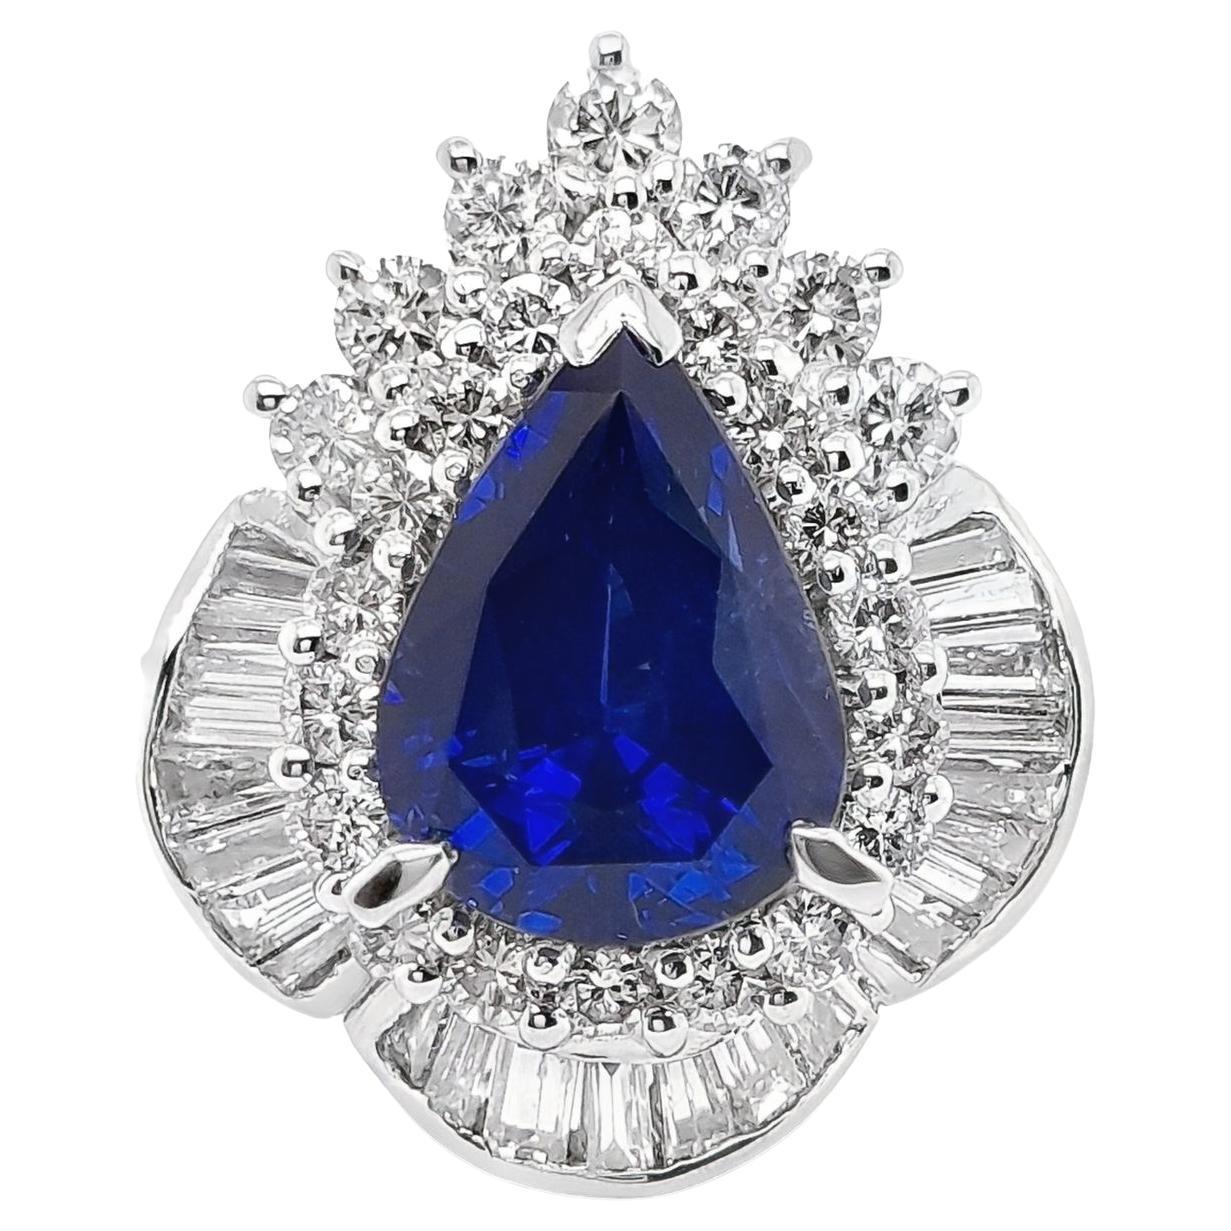 IGI Certified 5.79ct Kashmir Sapphire Vivid Blue 1.73ct Diamonds Platinum Ring For Sale